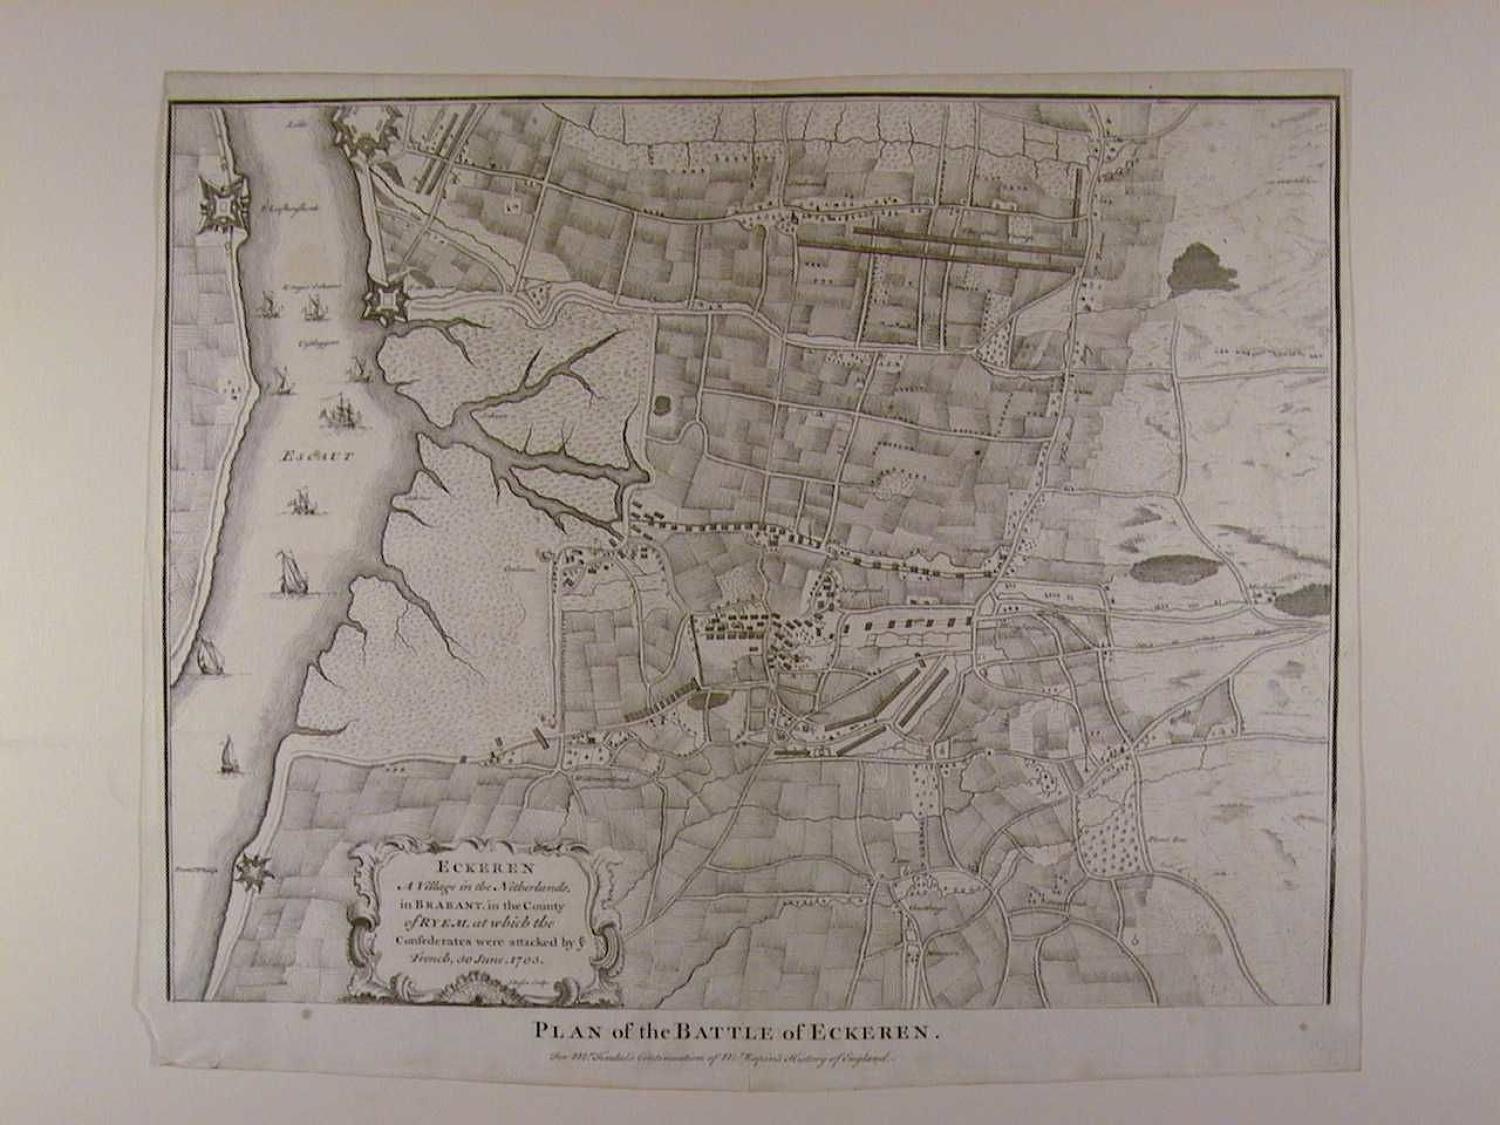 Plan of the Battle of Eckeren by Isaac Basire